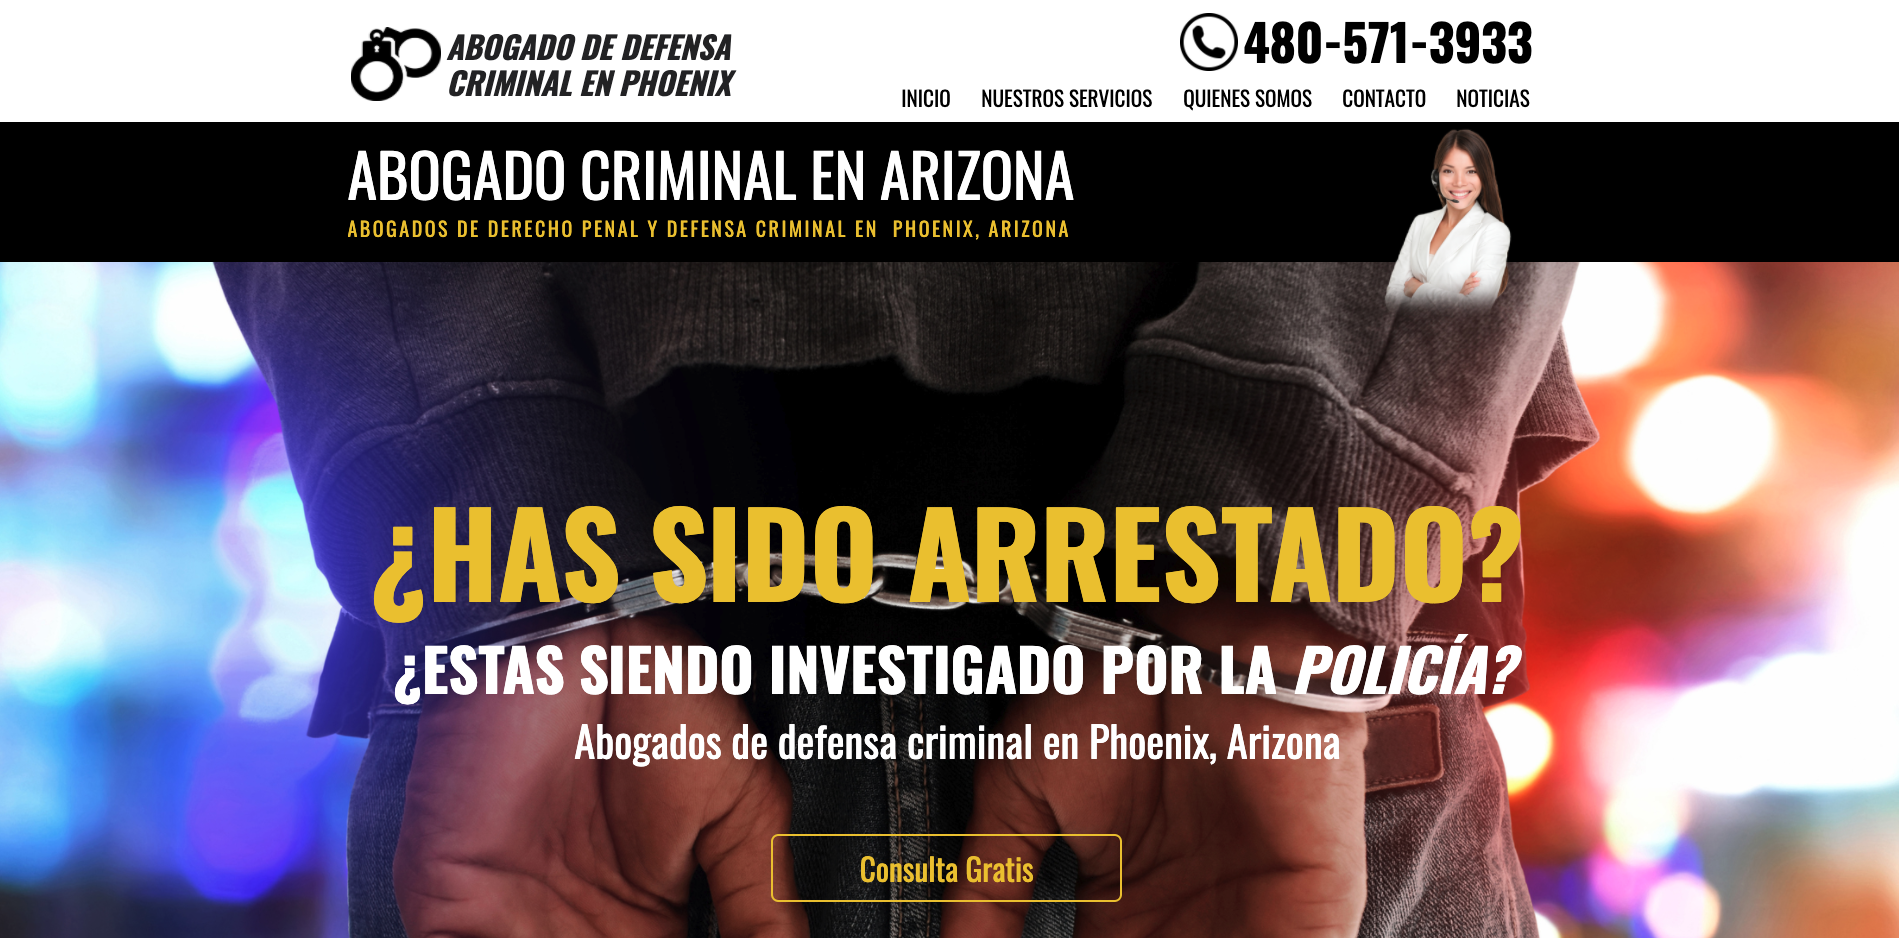 Criminal defense lawyer website in Spanish